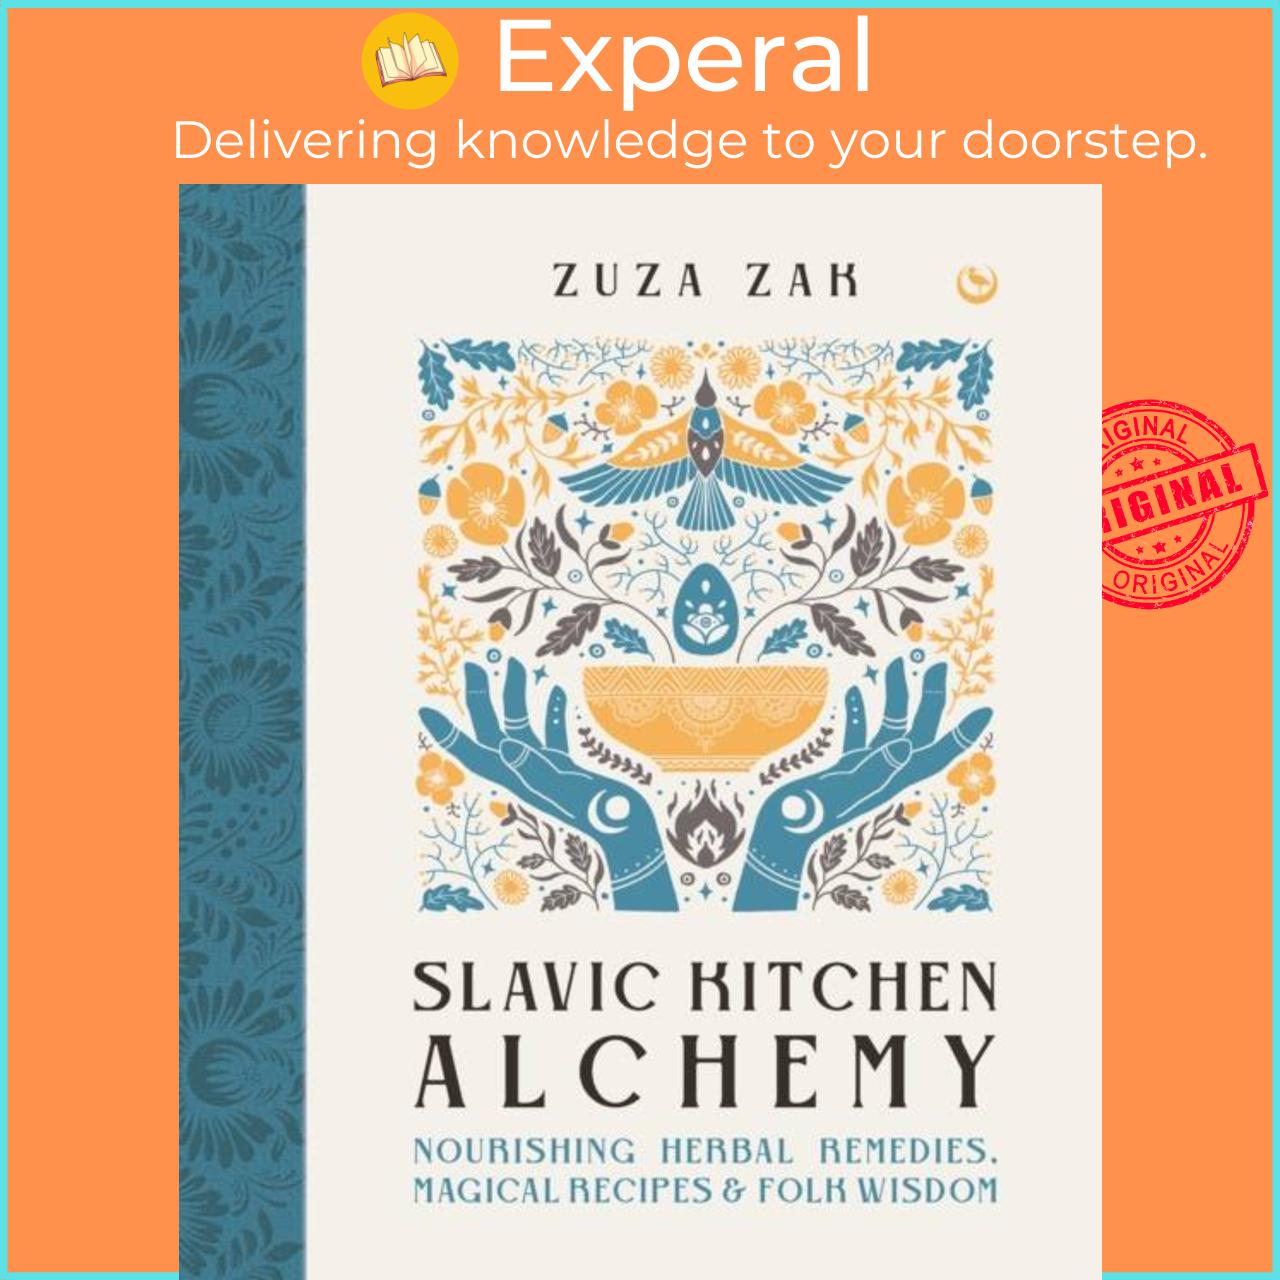 Sách - Slavic Kitchen Alchemy - Nourishing Herbal Remedies, Magical Recipes & Folk W by Zuza Zak (UK edition, hardcover)